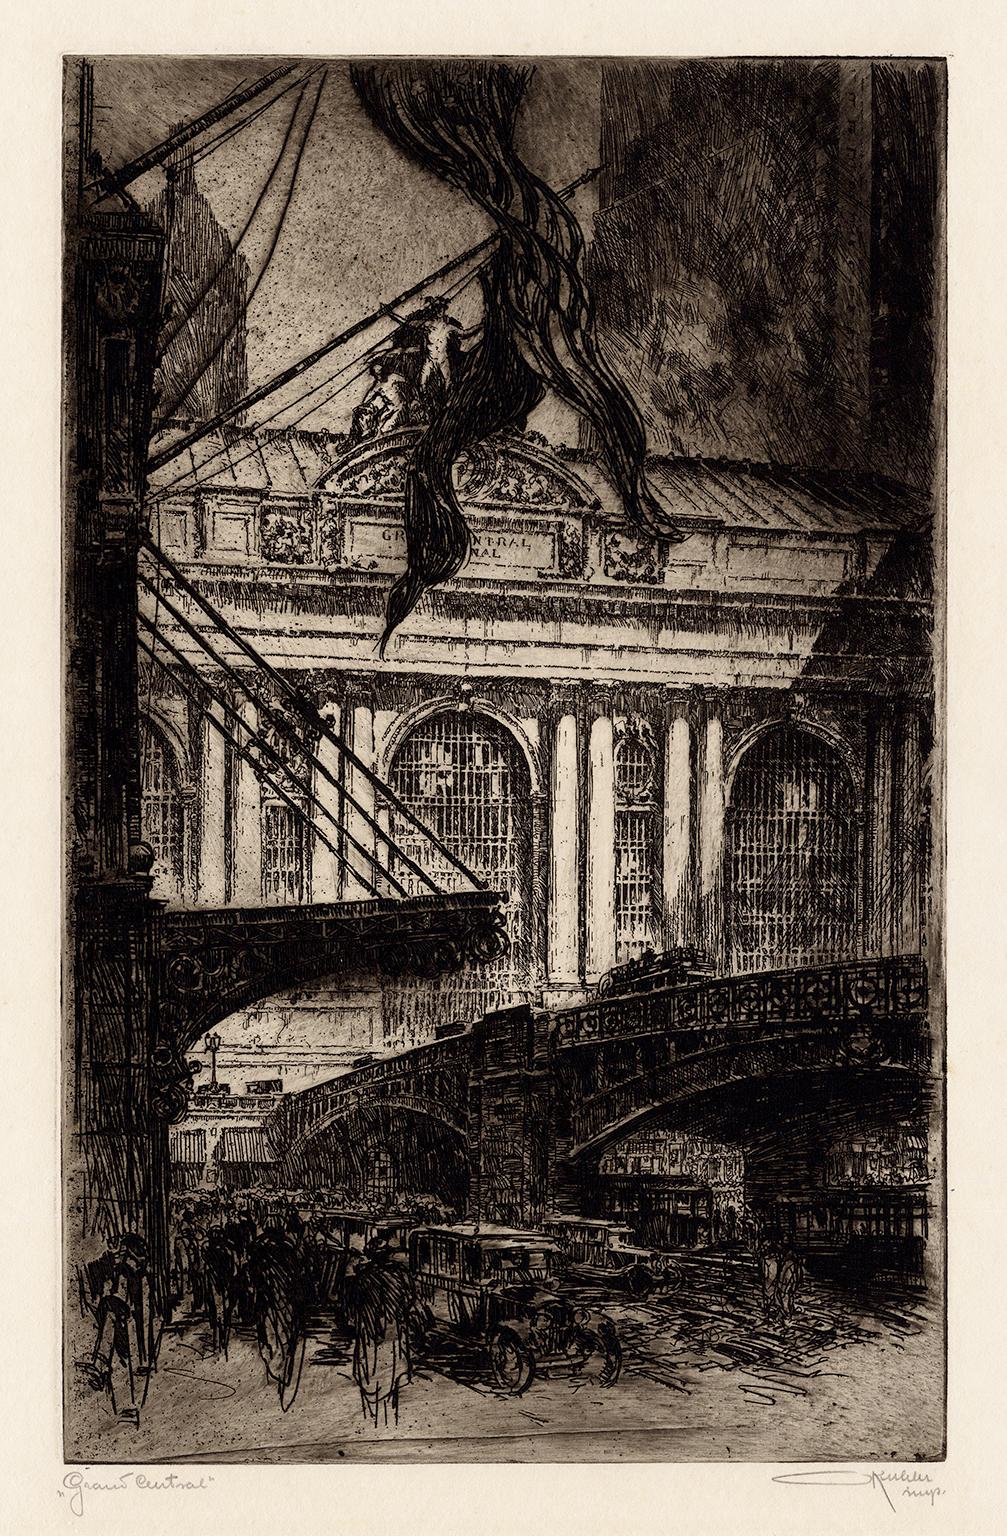 Otto Kuhler Figurative Print - 'Grand Central Station' — 1920s New York City